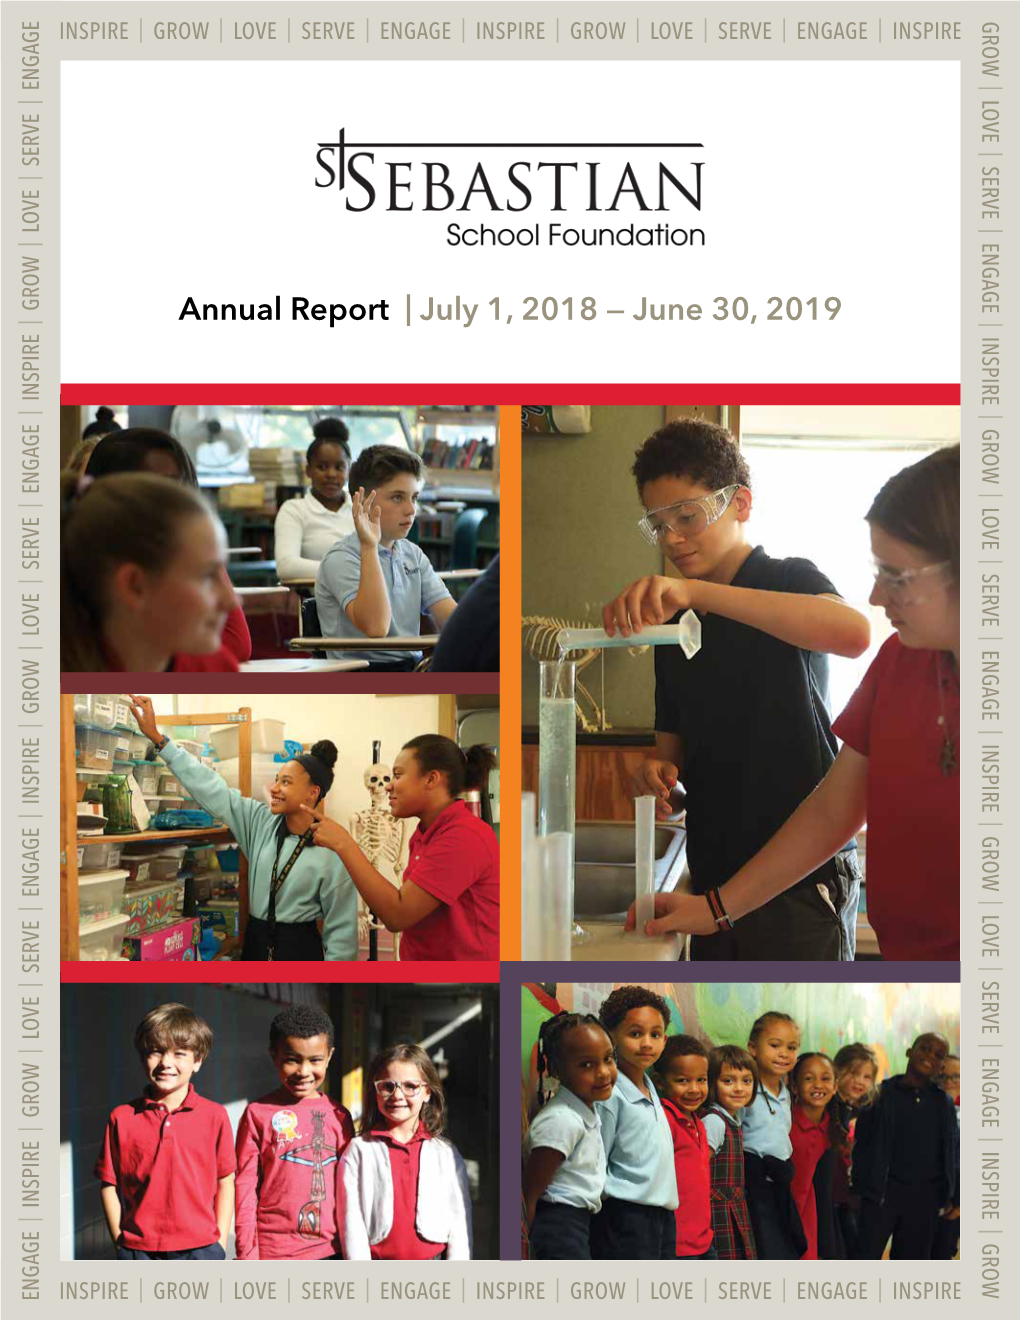 Annual Report | July 1, 2018 — June 30, 2019